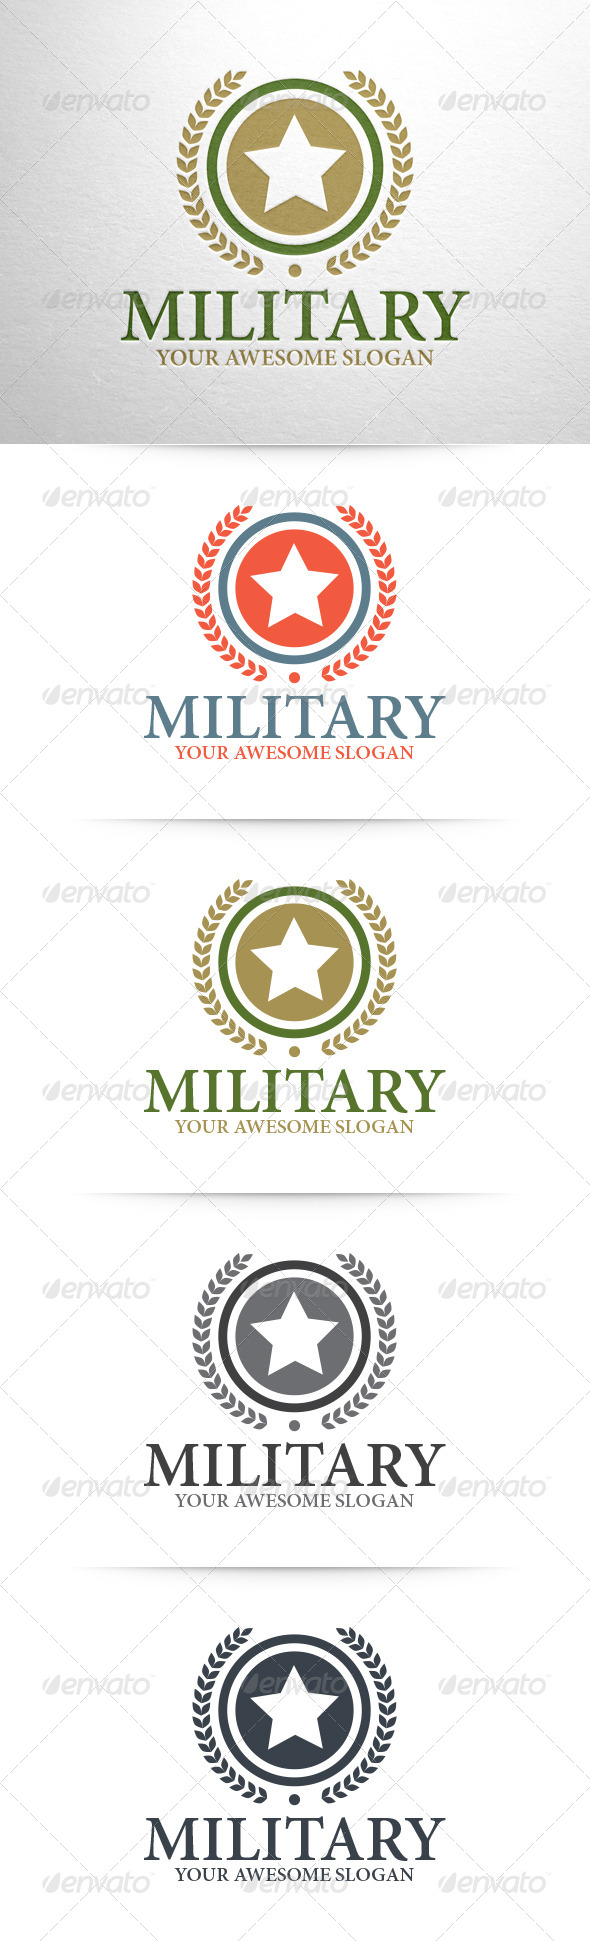 GraphicRiver Military Logo Template 6321892